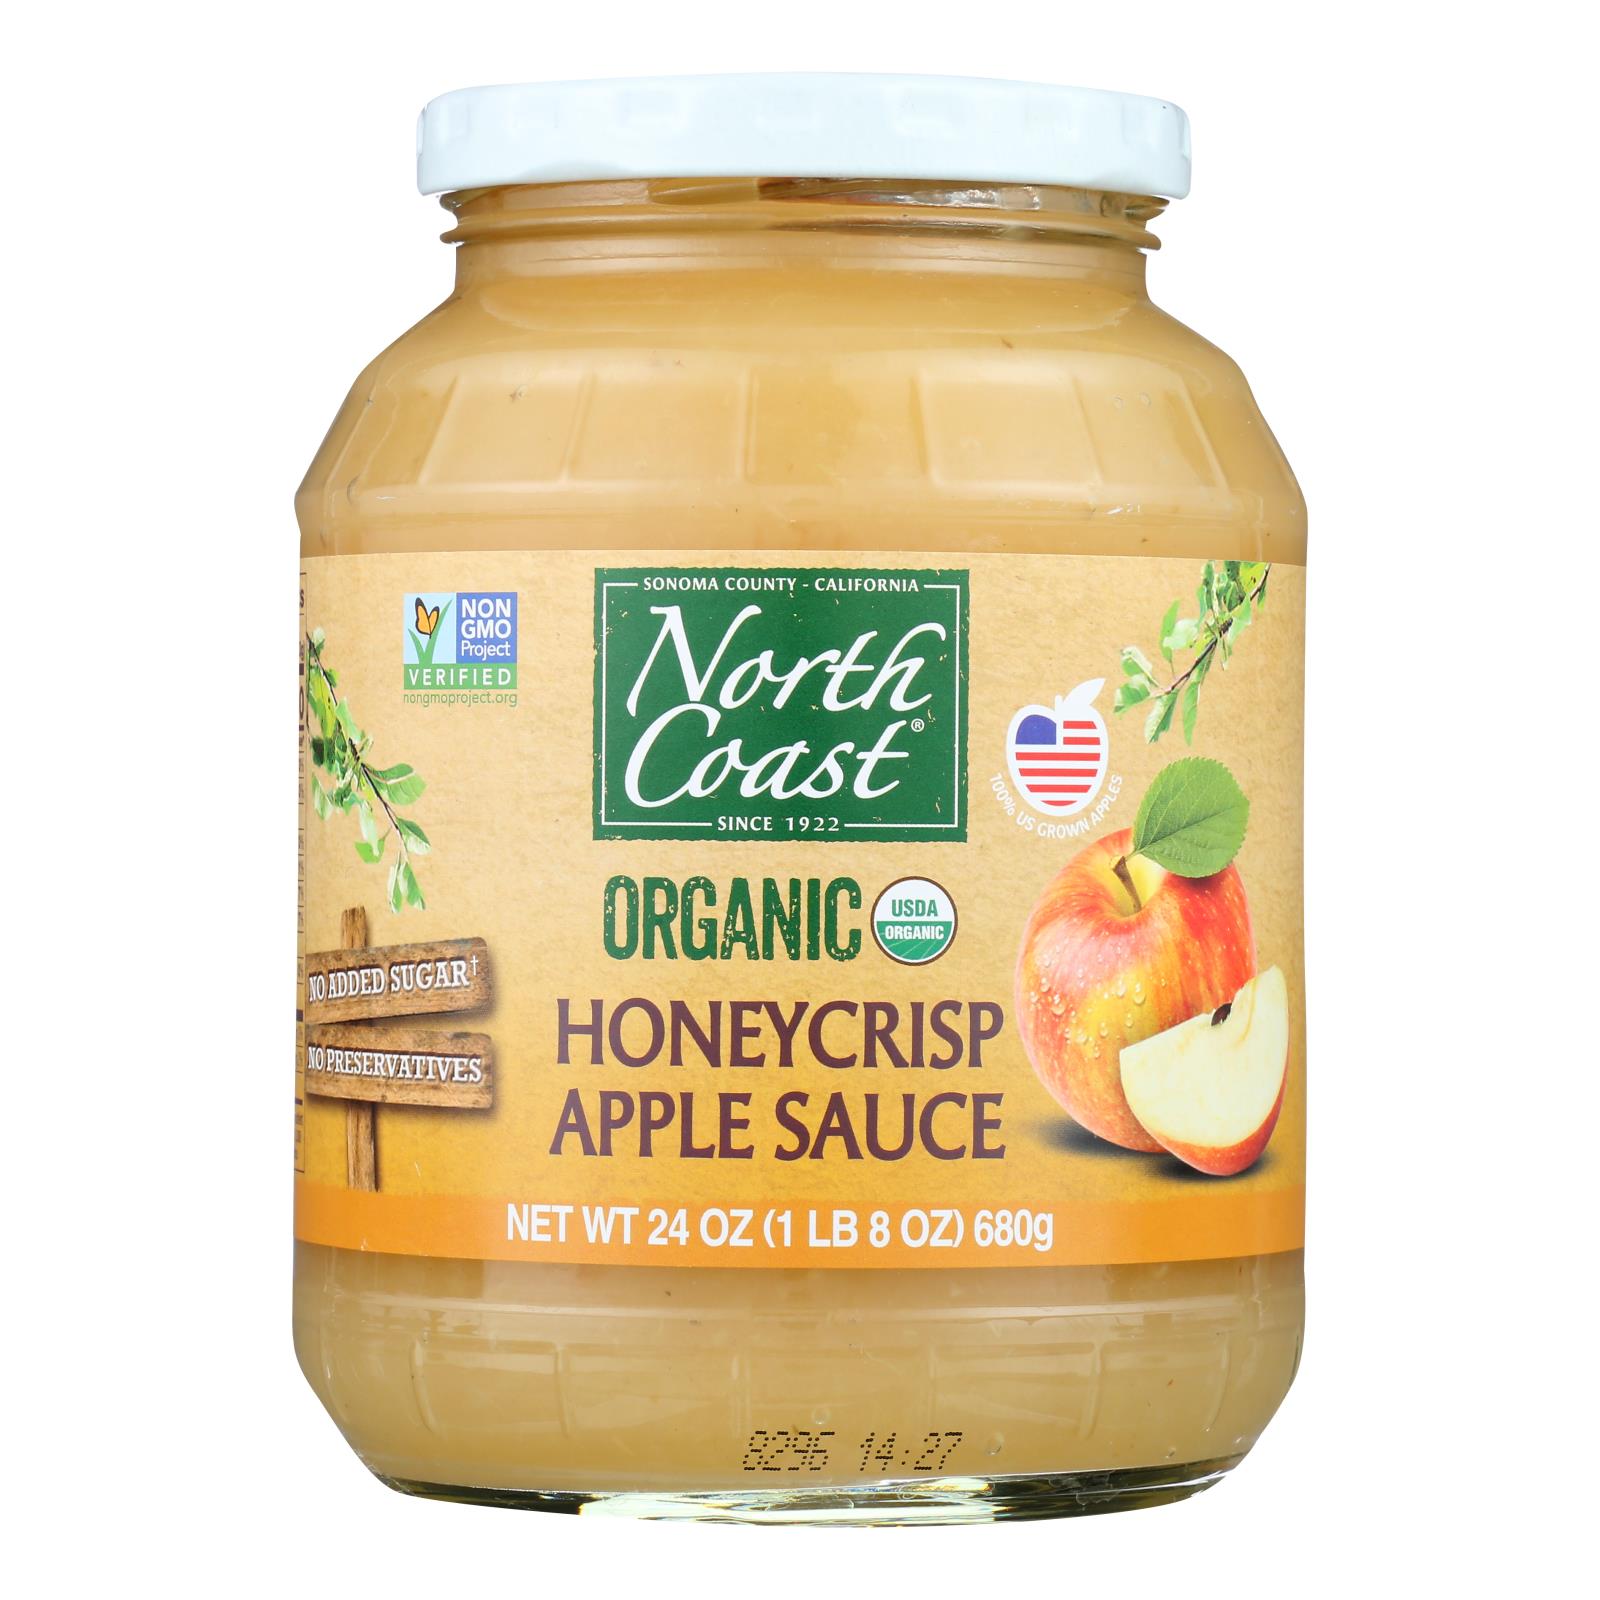 North Coast Organic Honeycrisp Apple Sauce - 6개 묶음상품 - 24 OZ